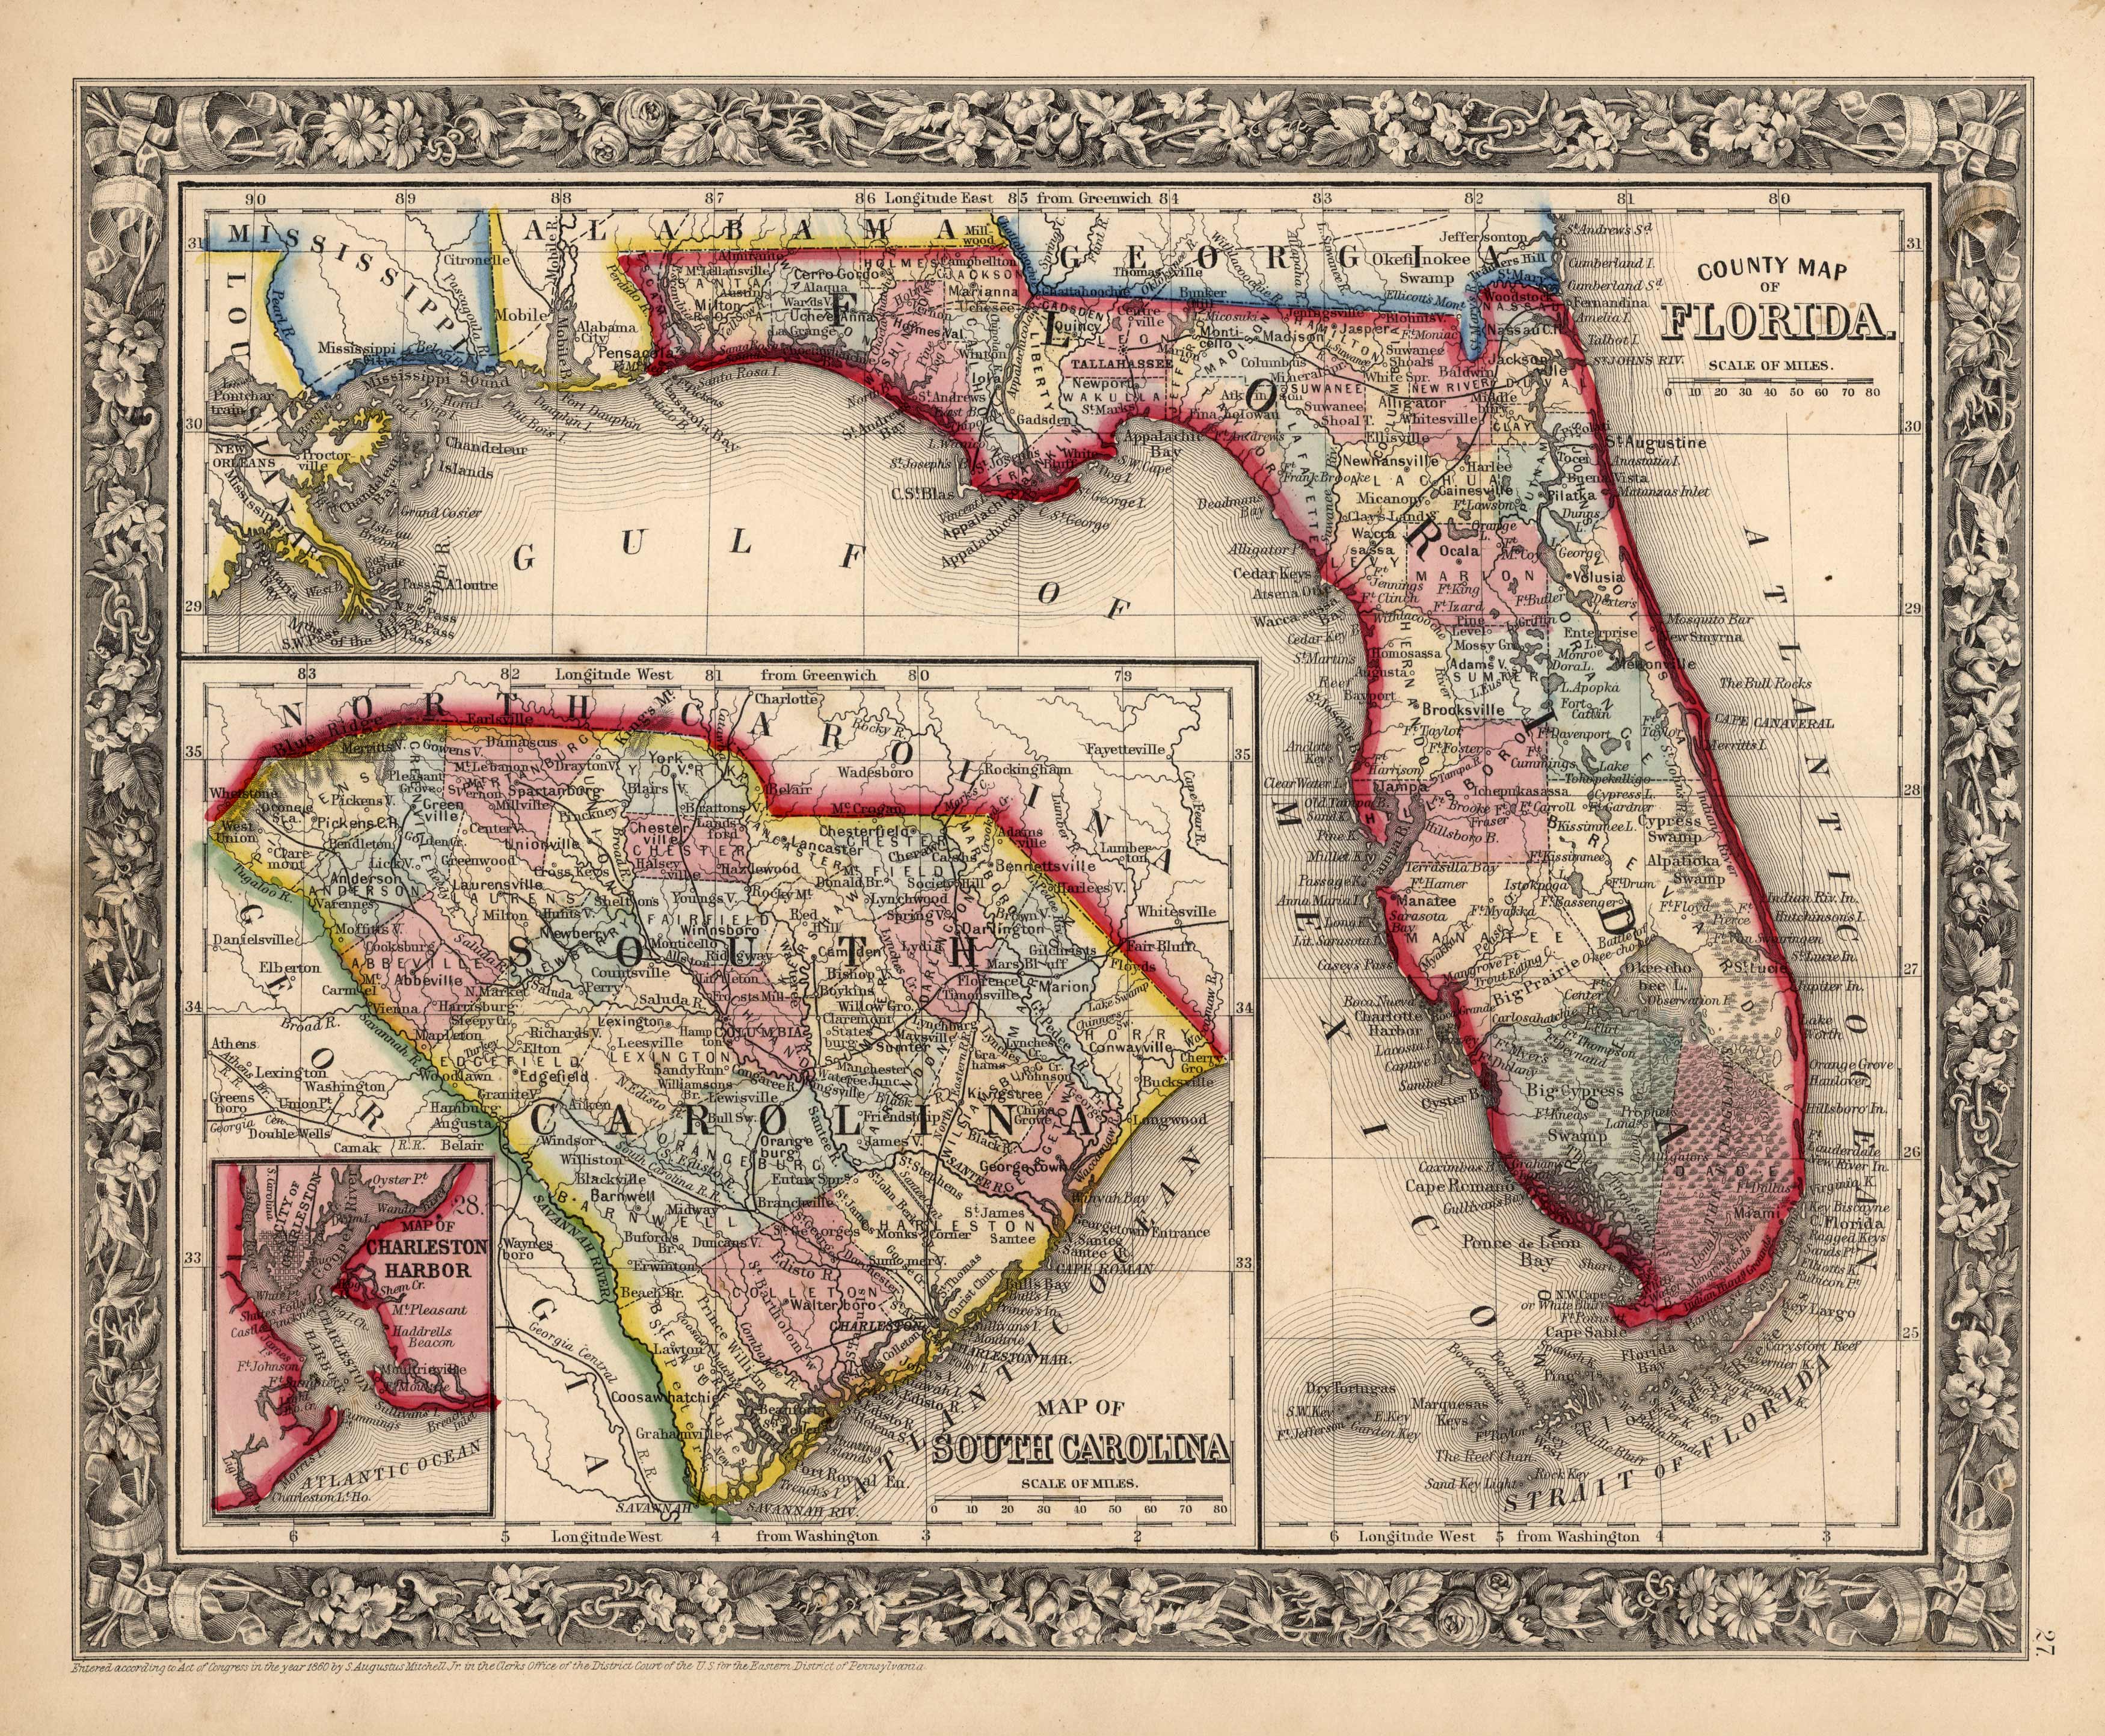 County Map of Florida. Map of South Carolina. Map of Charleston Harbor.